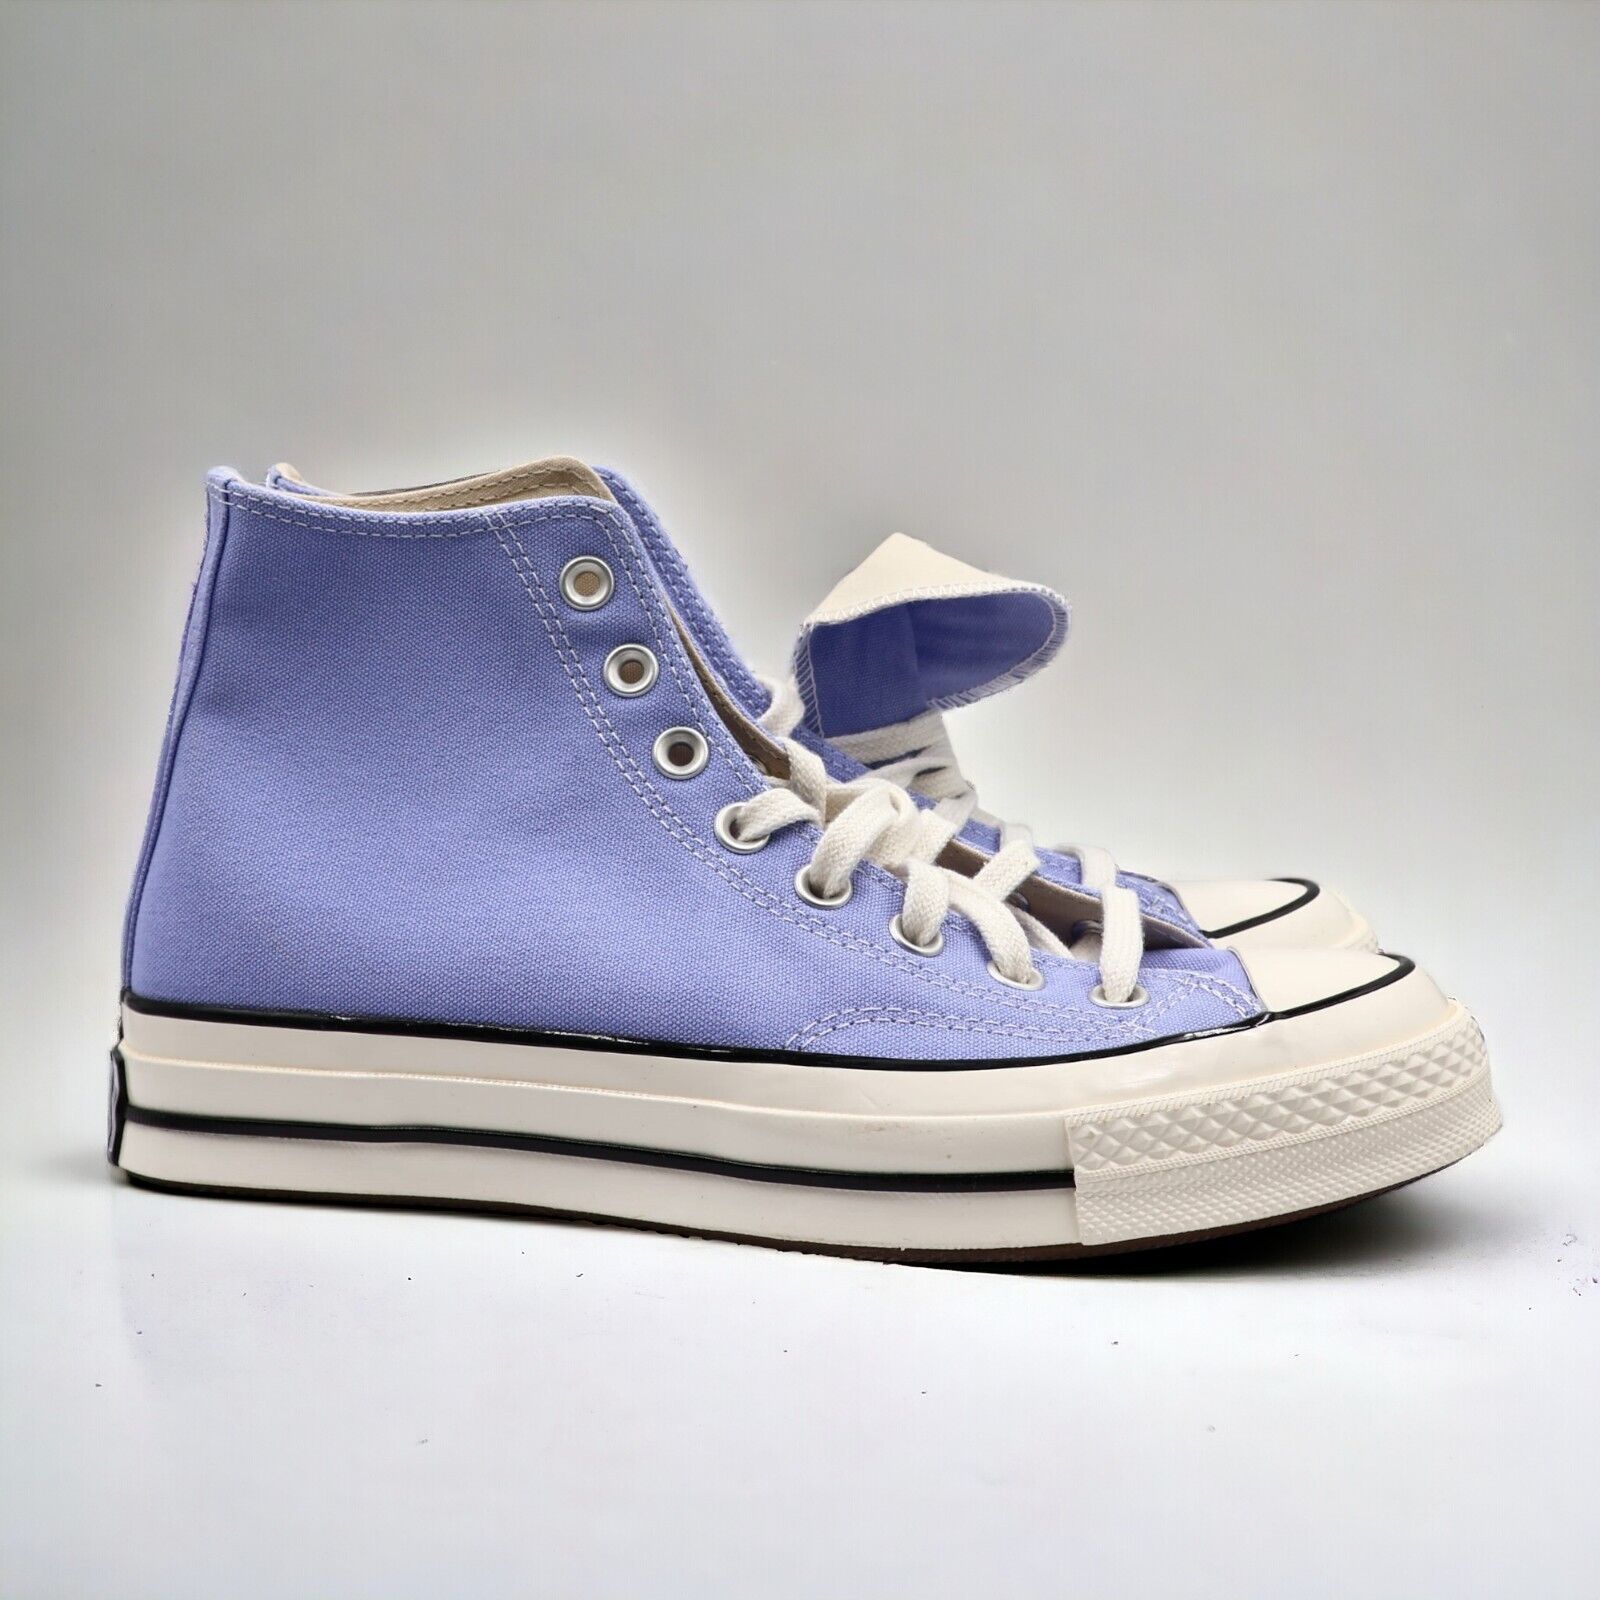 Converse Chuck All Star 70 High Top Shoes Size Men's 6.5 Women's 8.5 Ultraviolet